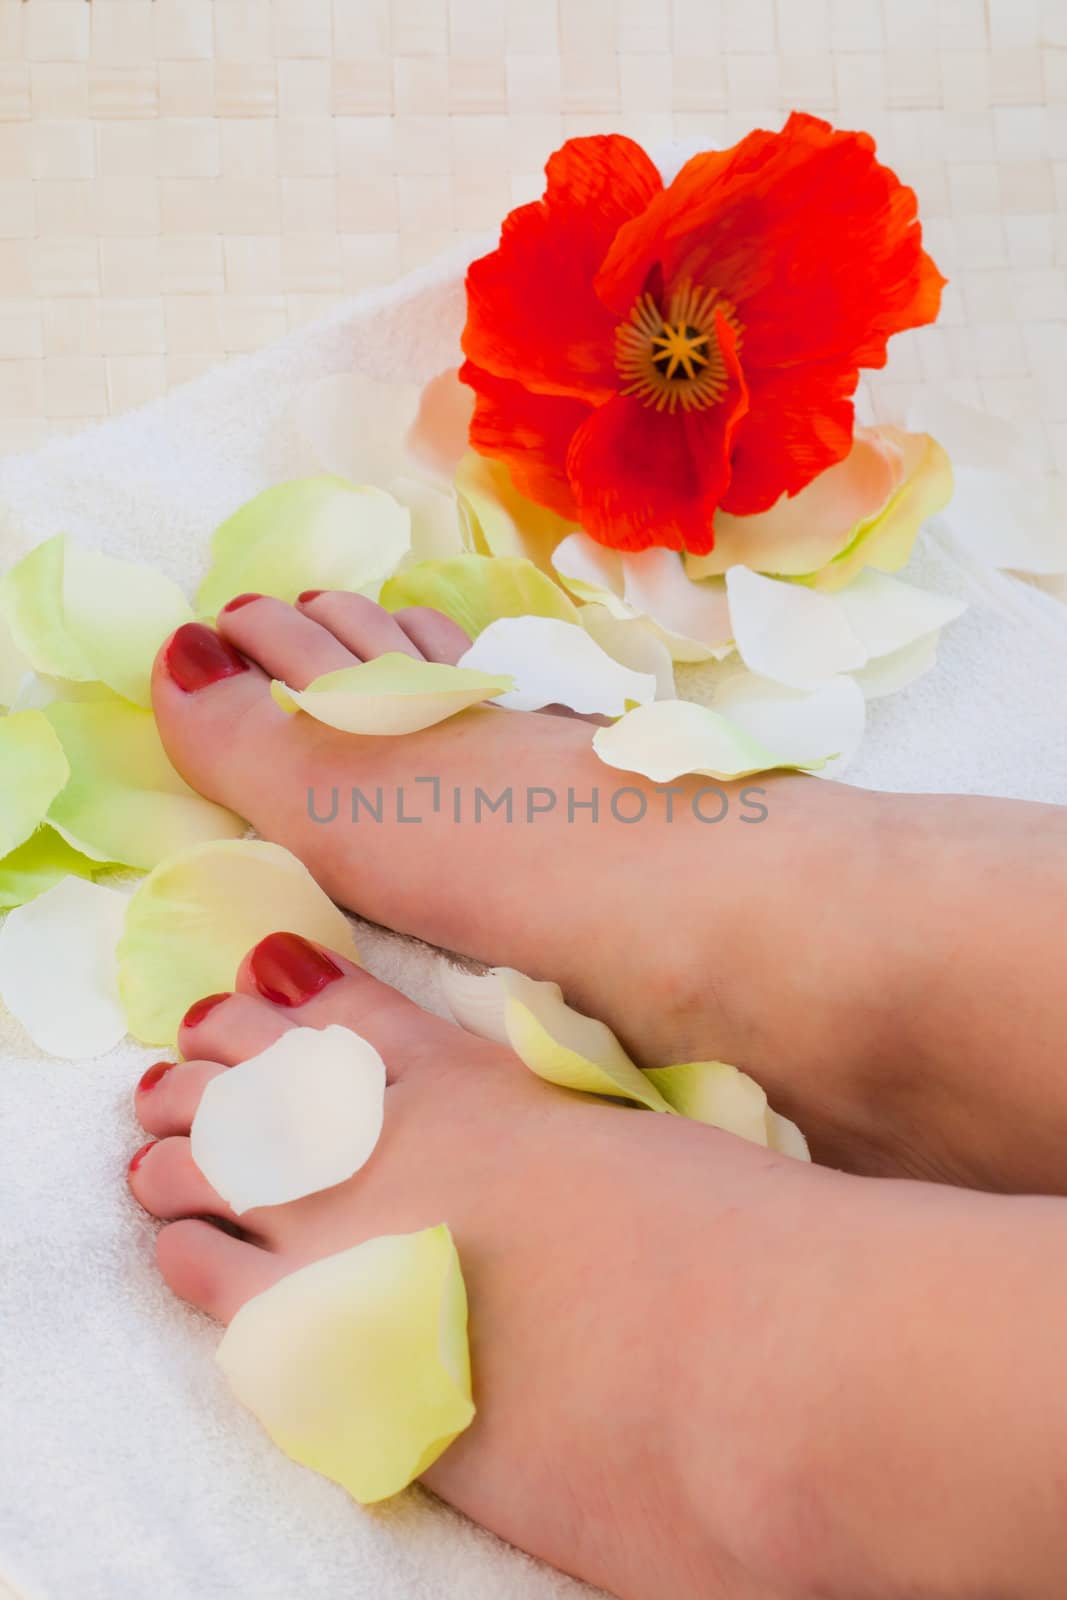 Feet spa by remik44992